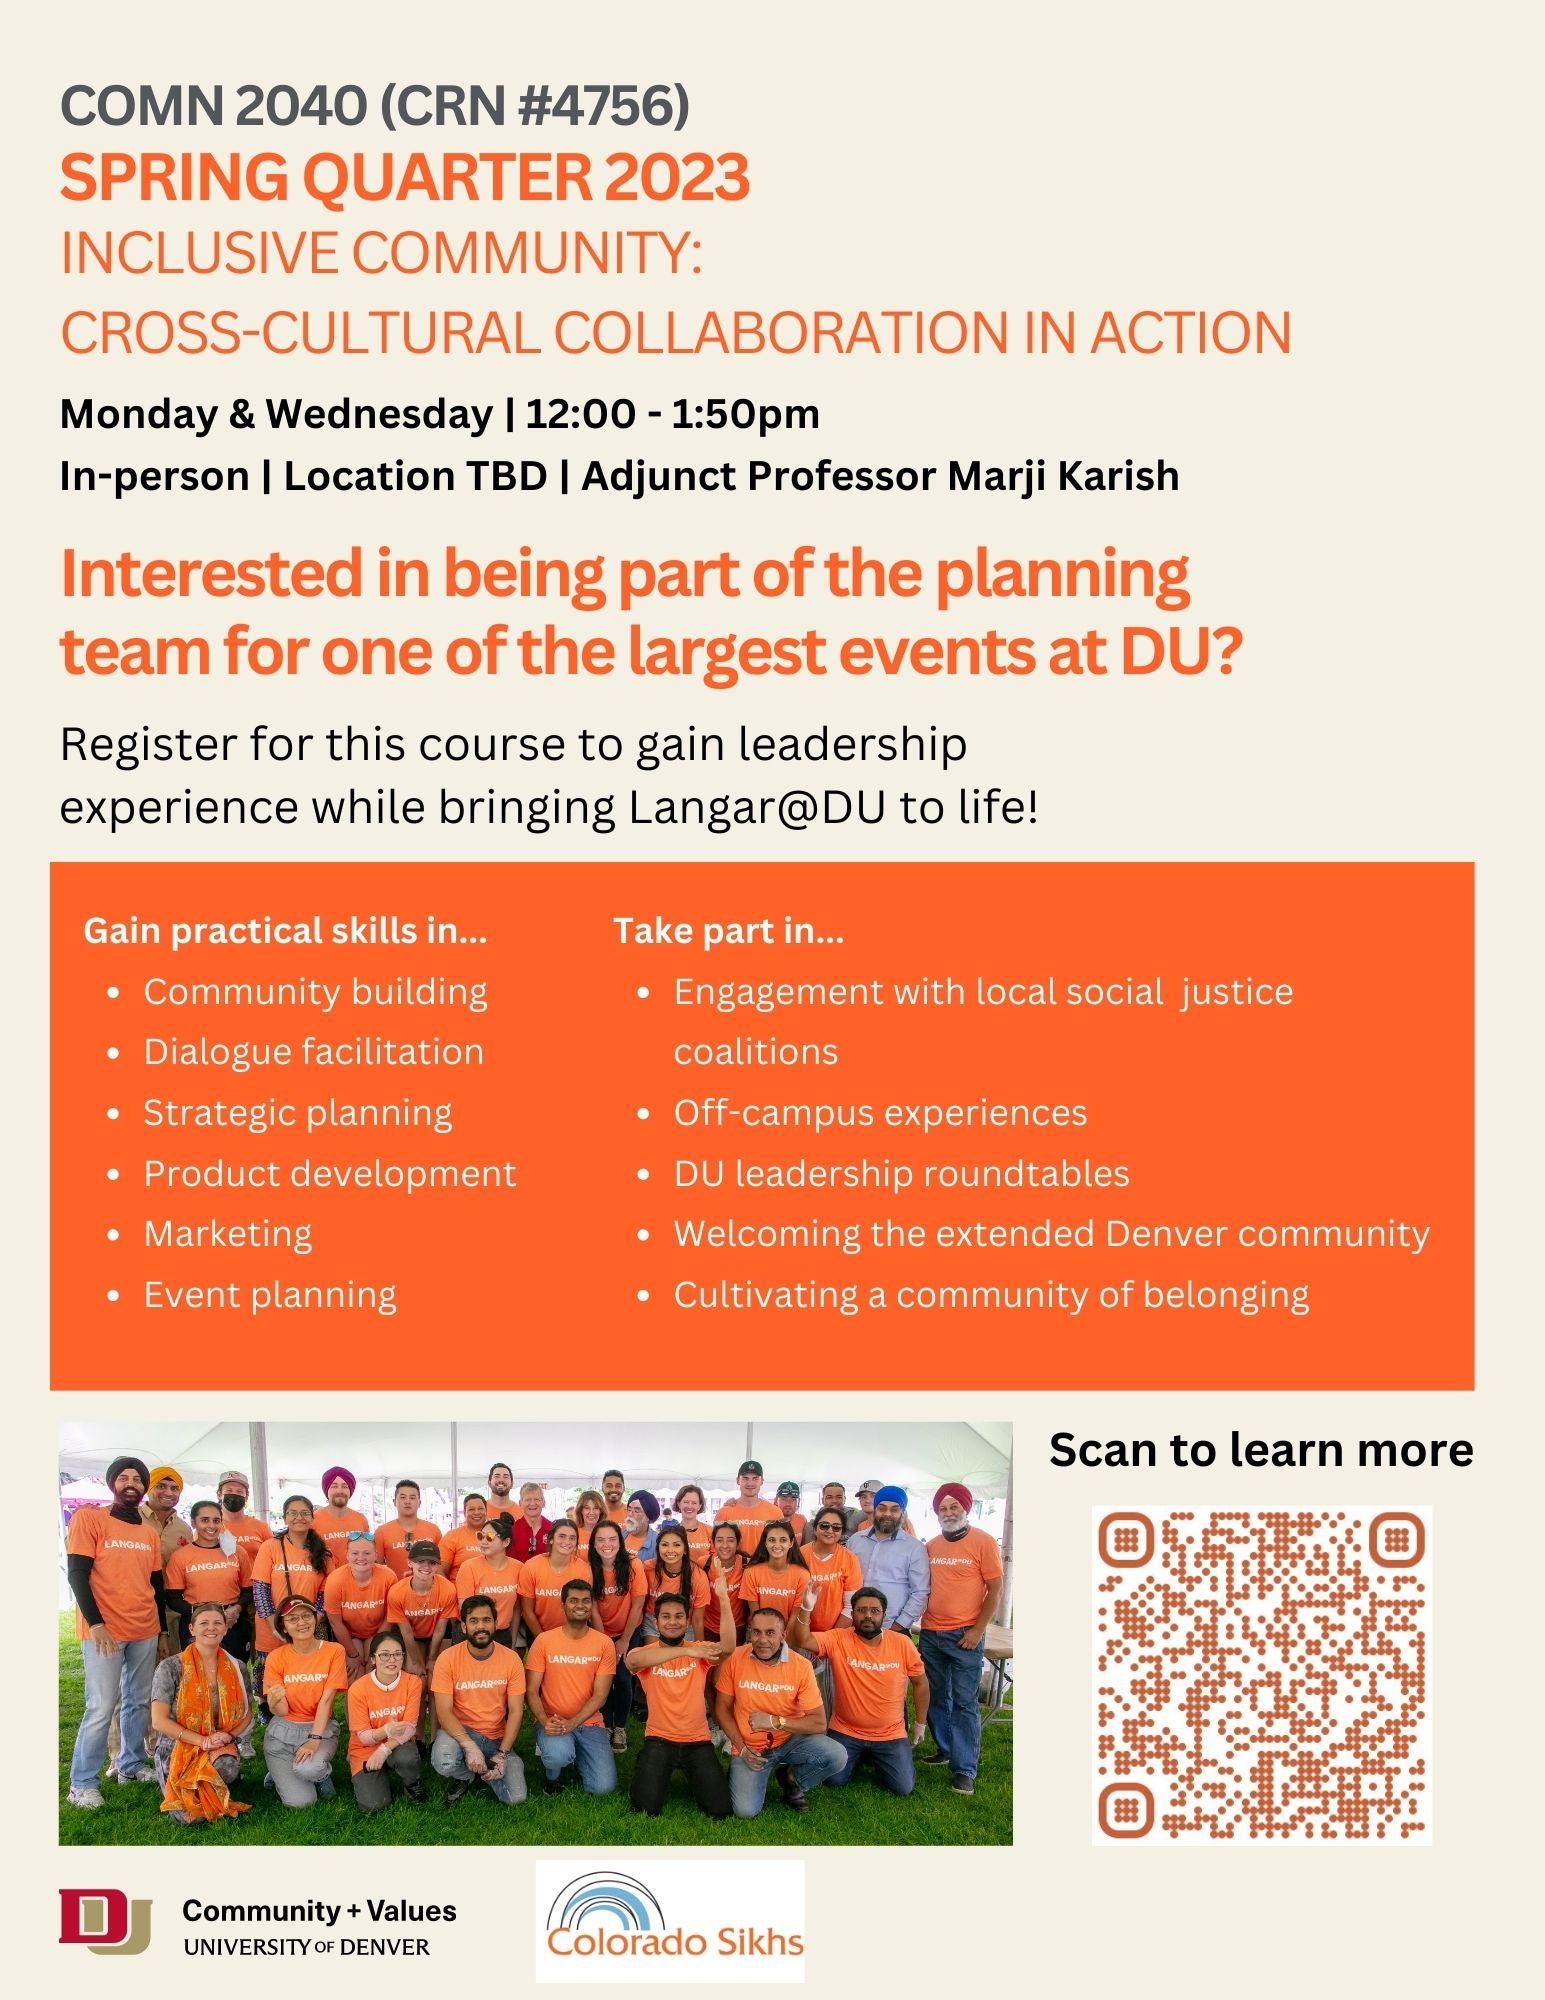 Langer@DU COMN 2040 Course Flyer Spring 2023 Inclusive Community: Cross-Cultural Collaboration in Action